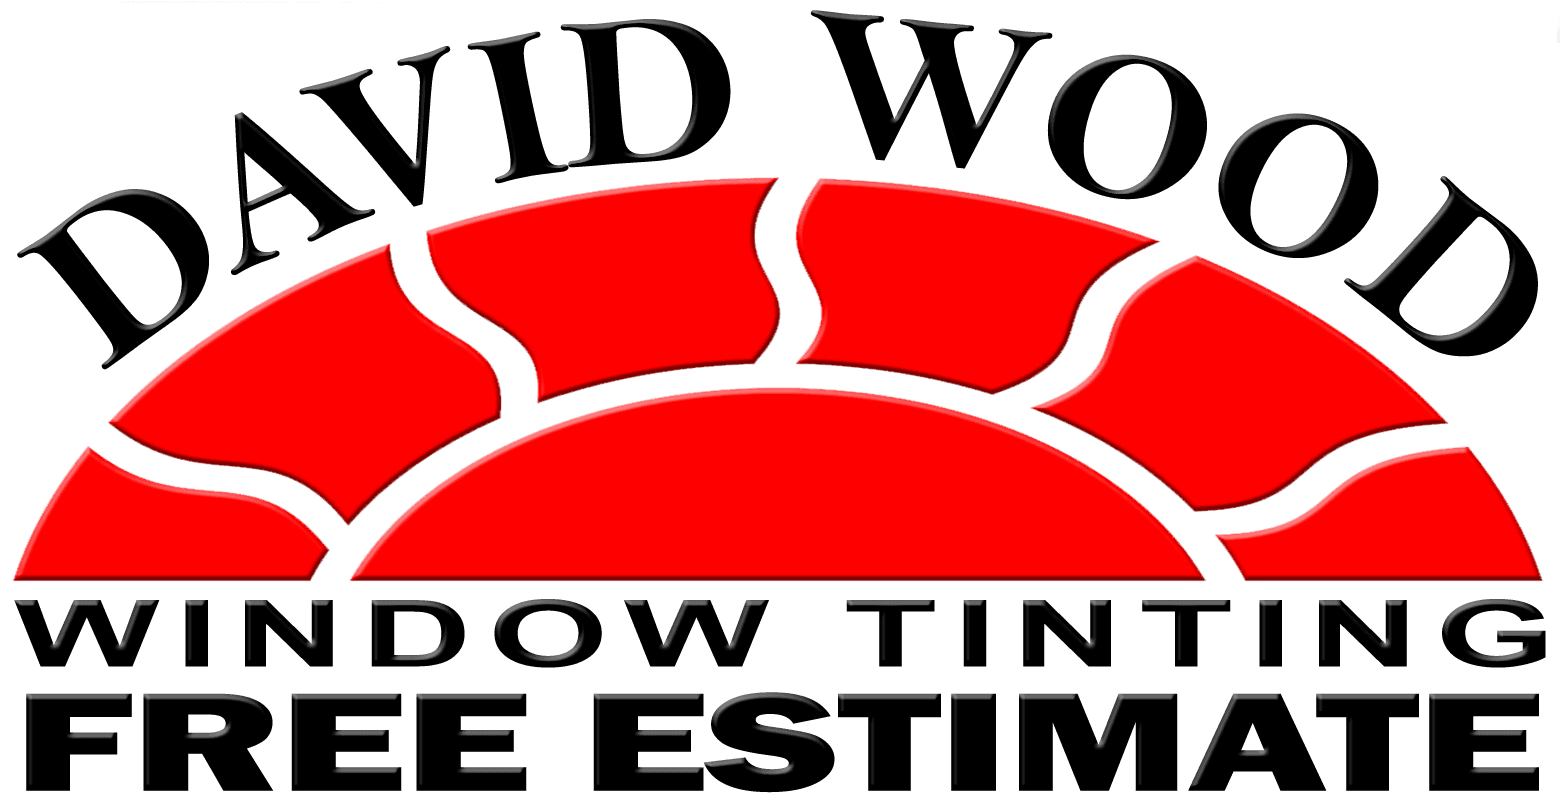 David wood window tinting free estimate